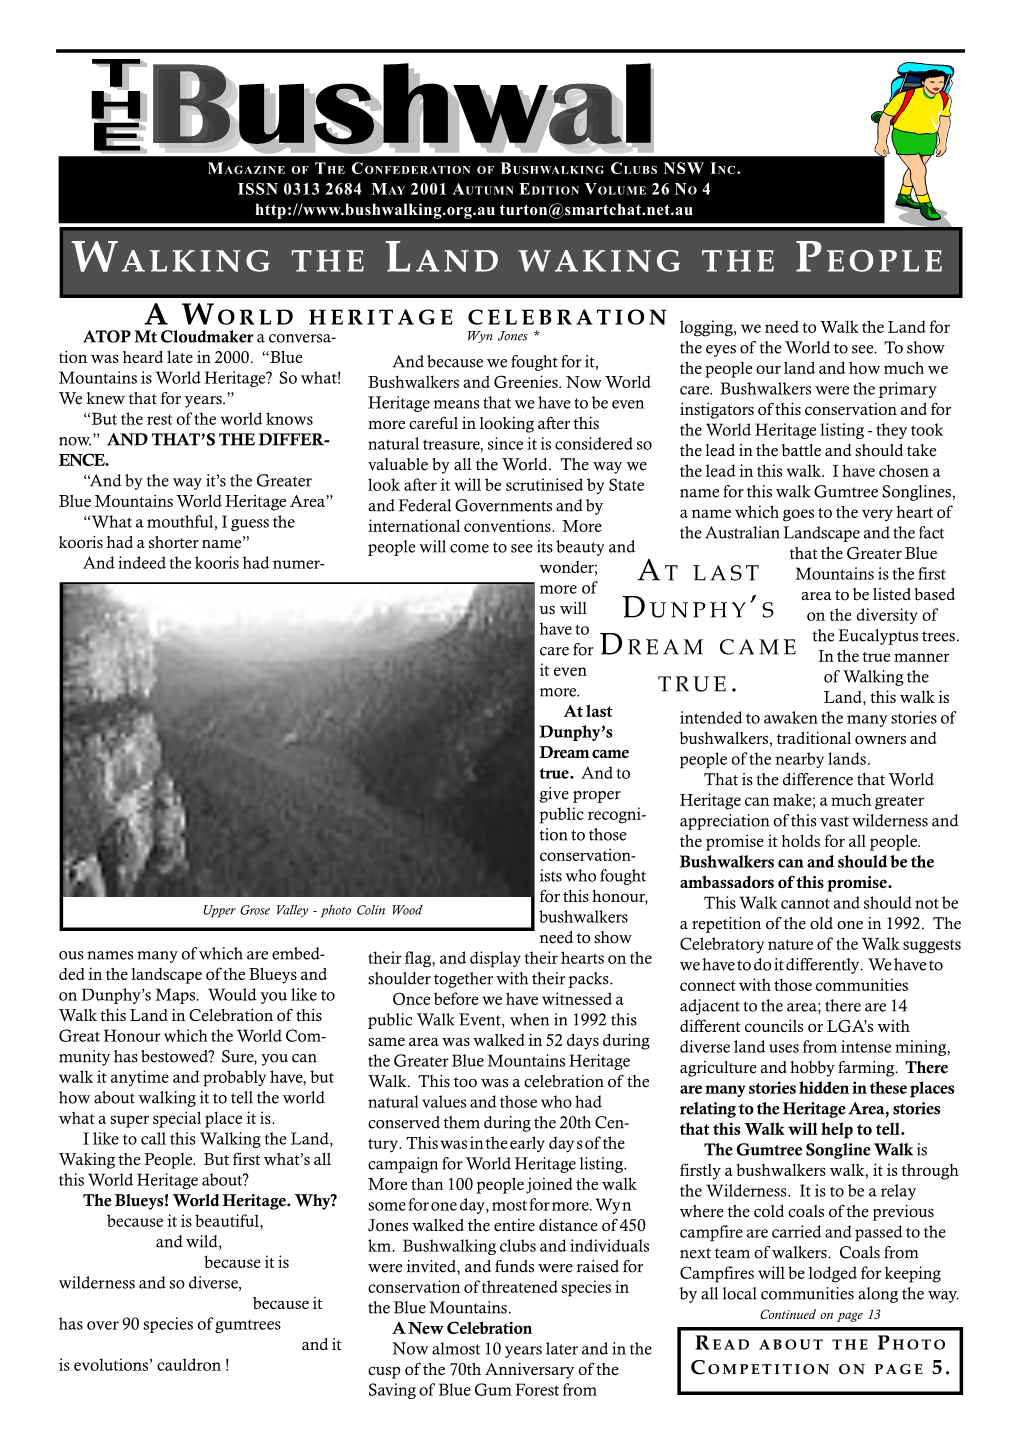 Walking the Land Waking the People